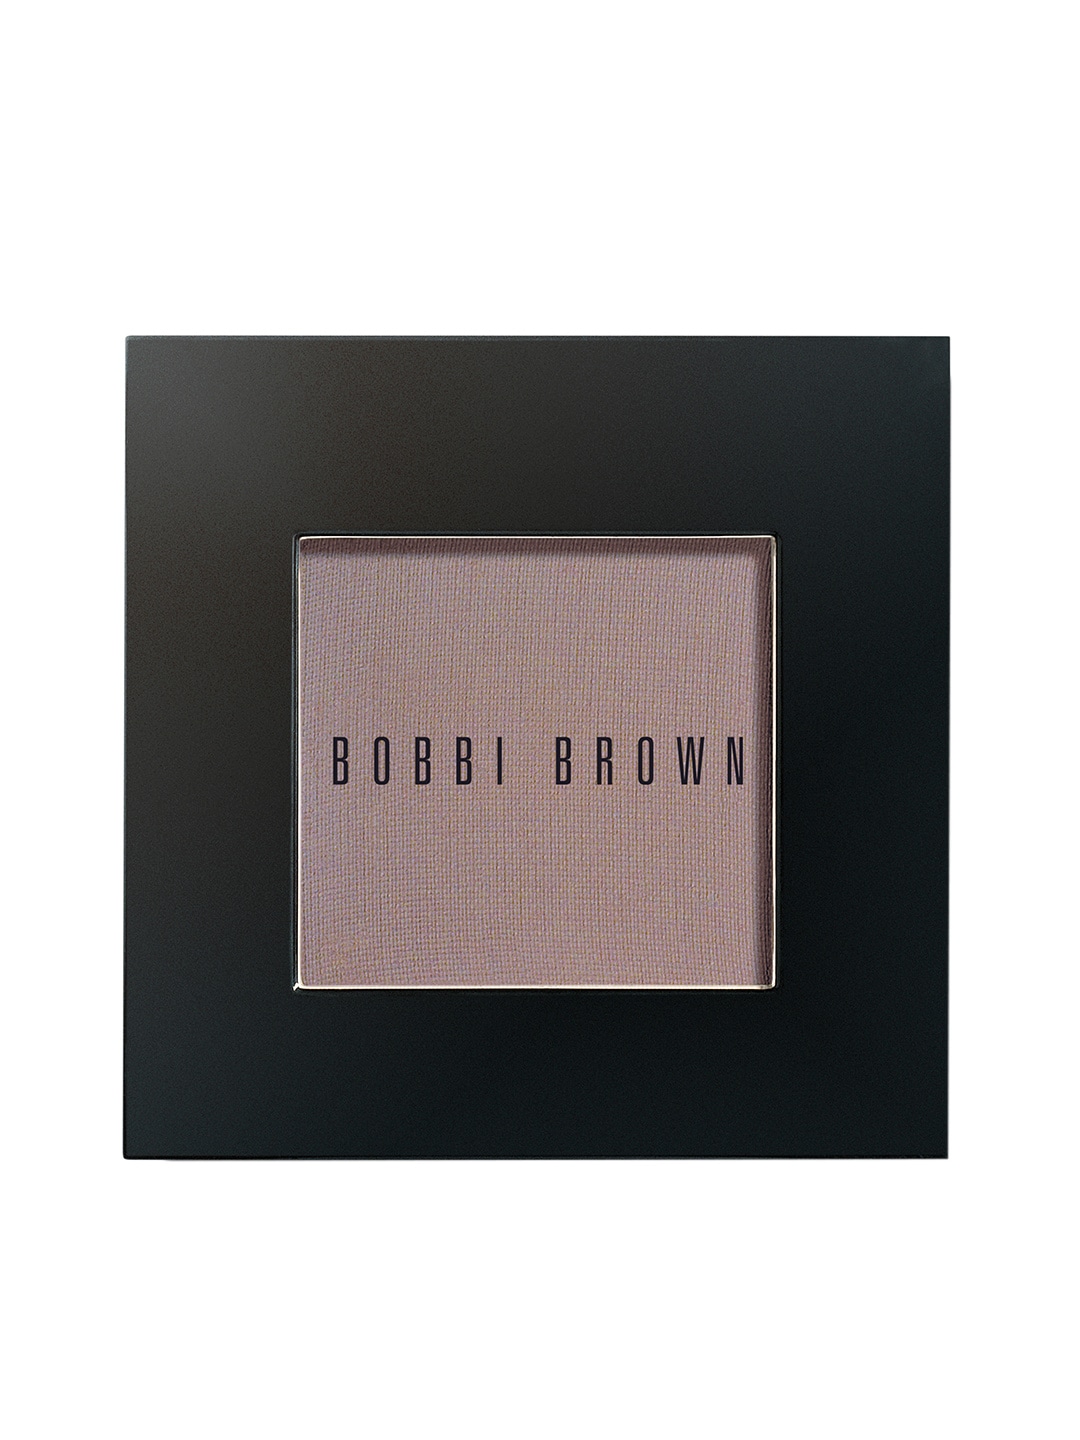 Bobbi Brown Eyeshadow - Heather 15 2.5 g Price in India